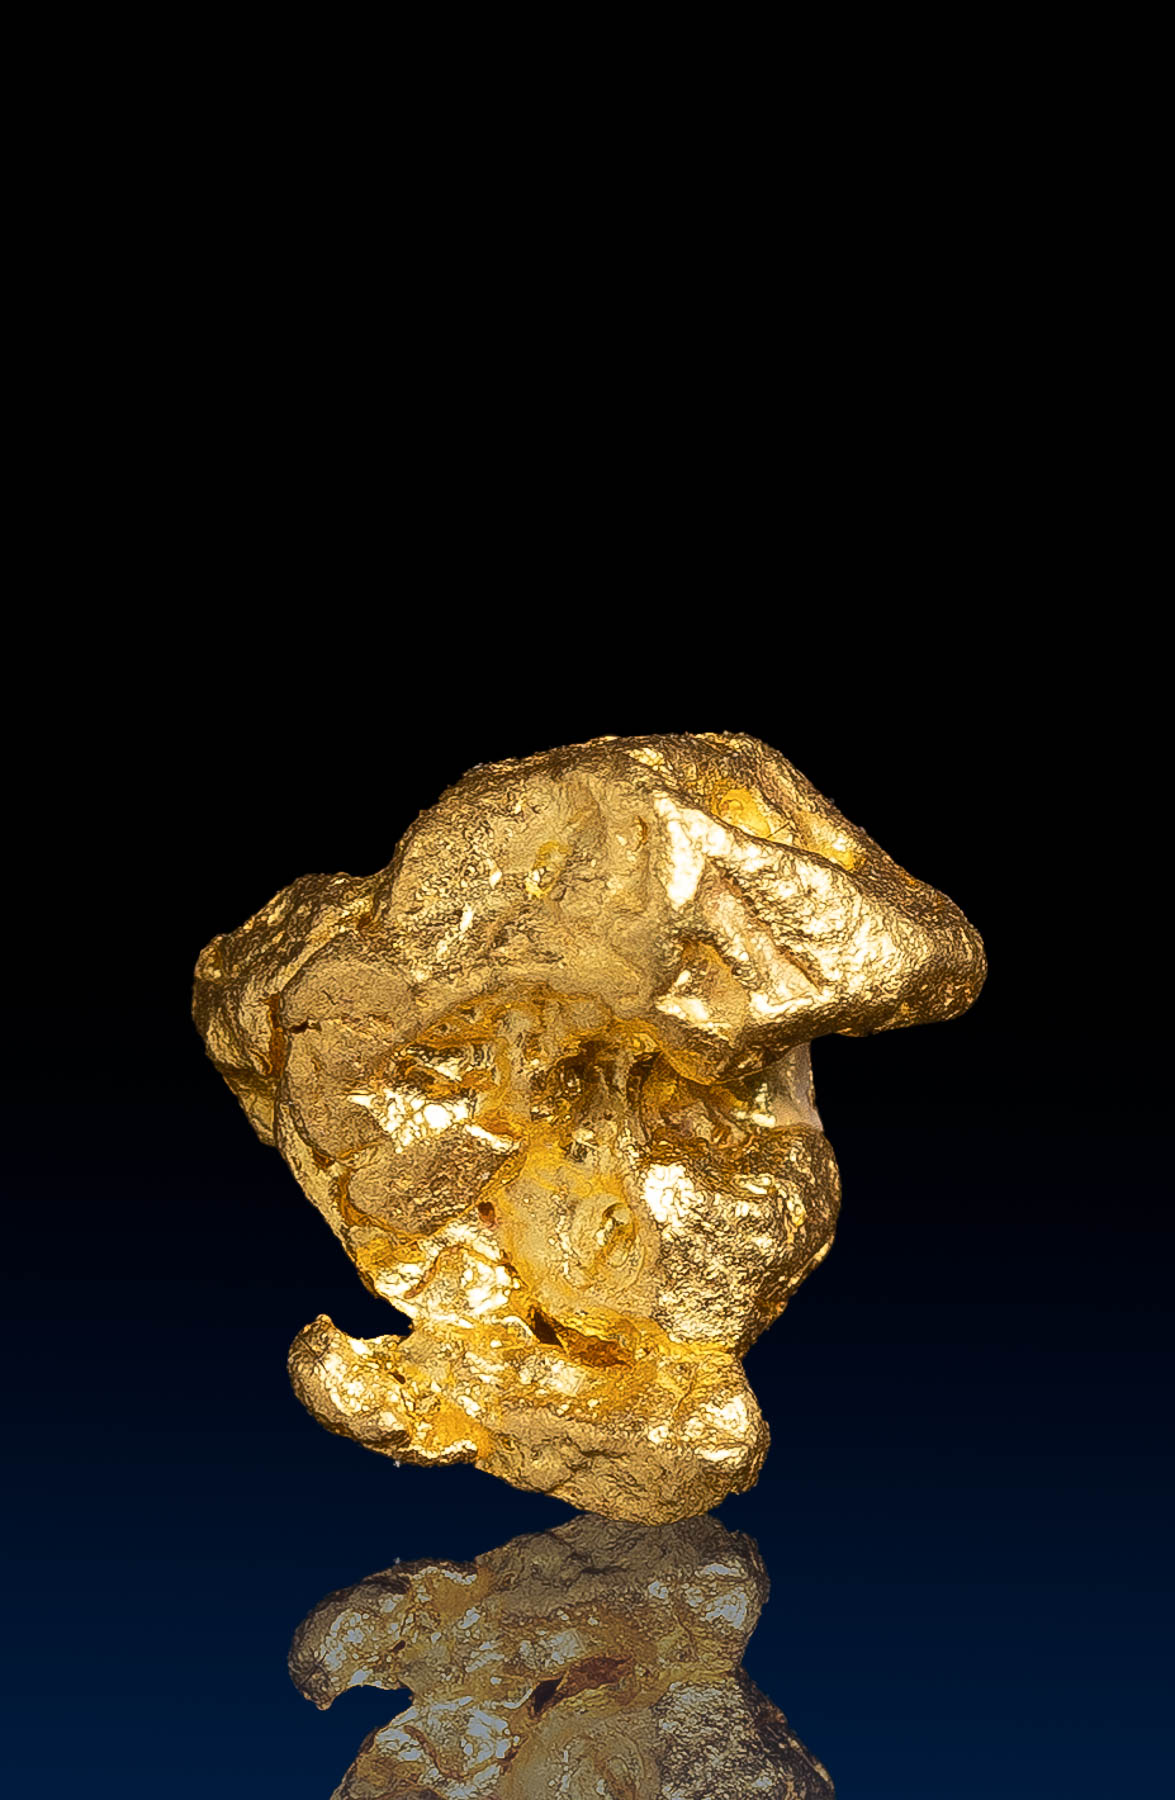 Sharp Gold Crystal Nugget from Alta Floresta, Brazil